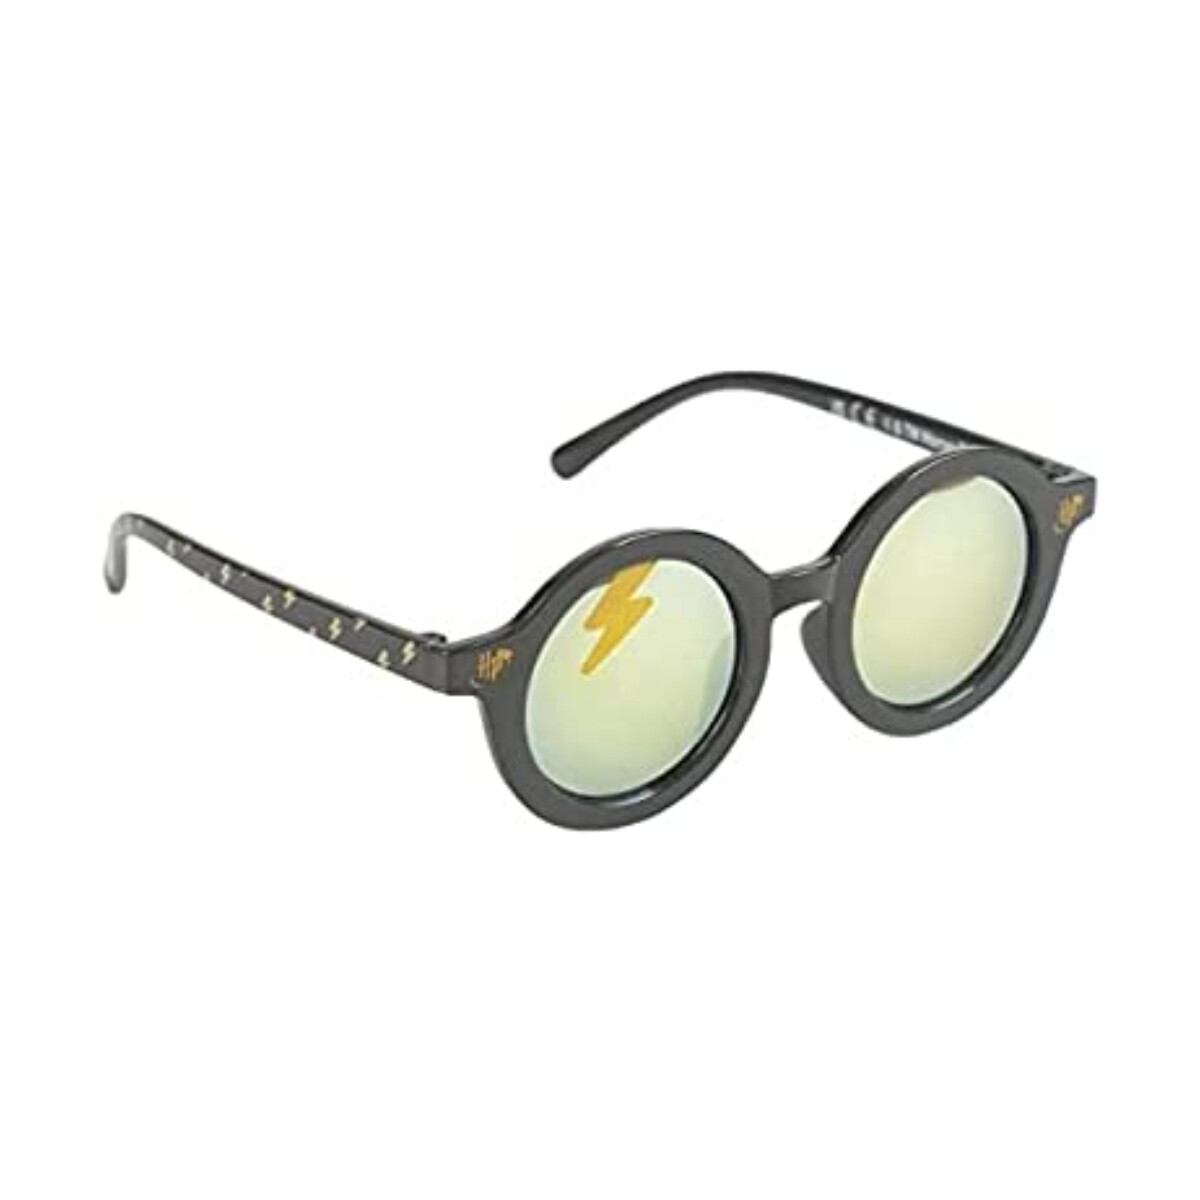 Relógios & jóias Rapaz óculos de sol Harry Potter 2500001994 Preto